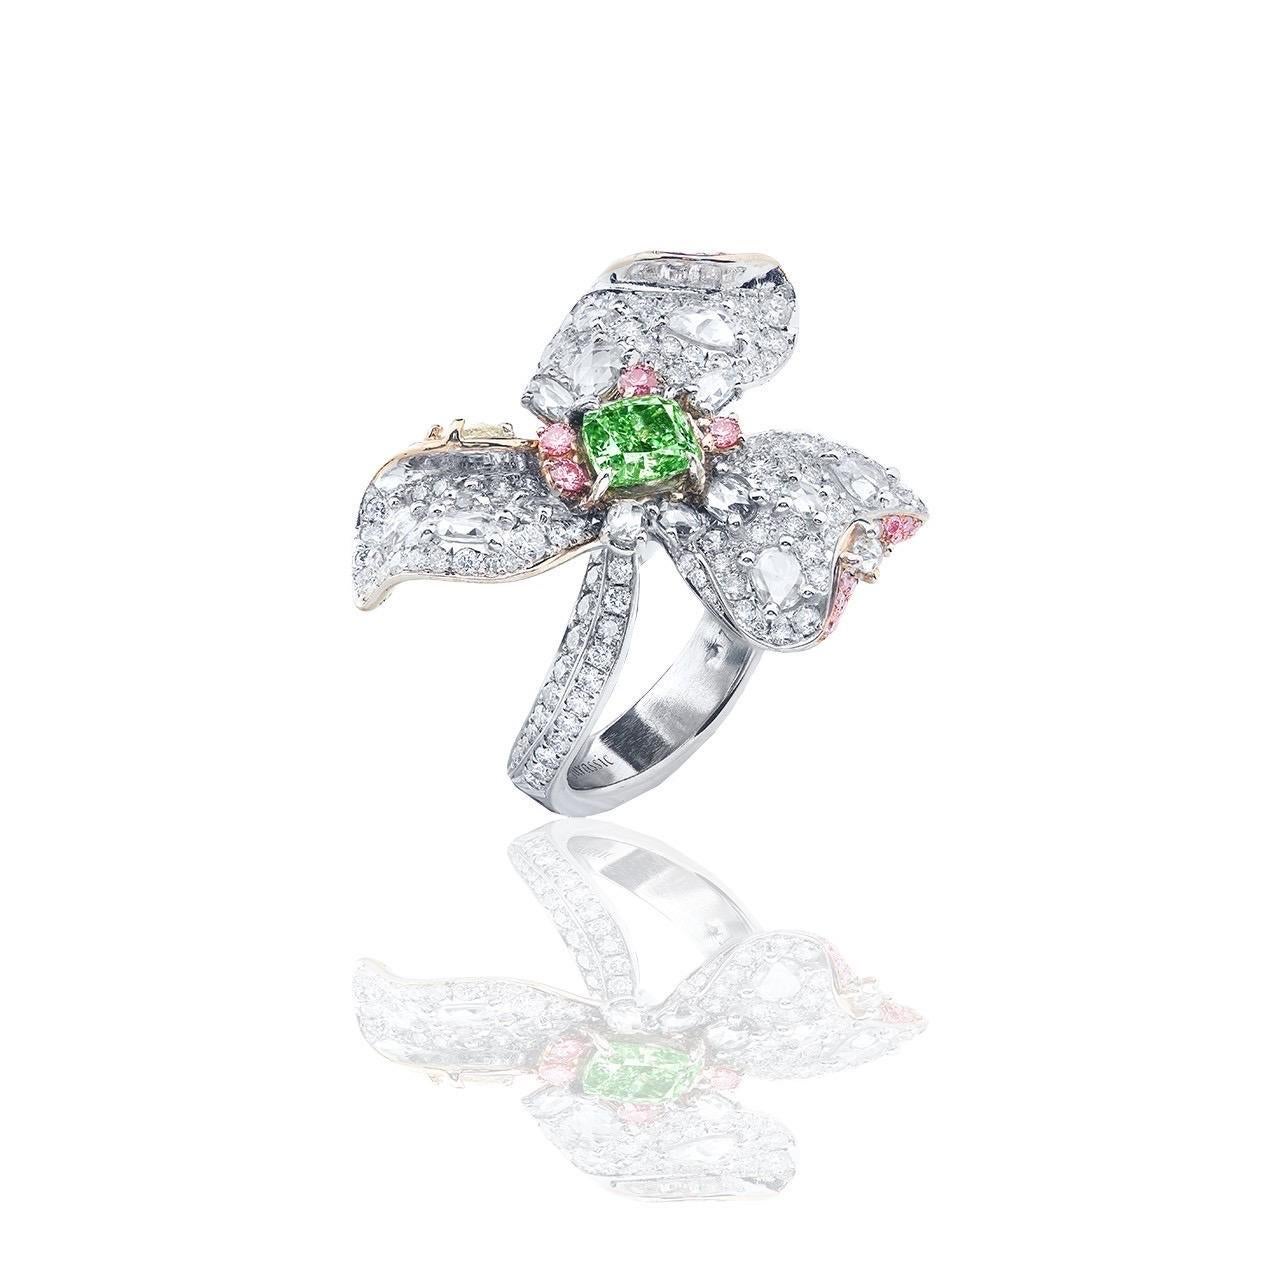 Cushion Cut Emilio Jewelry Gia Certified Fancy Intense Green Diamond Ring For Sale